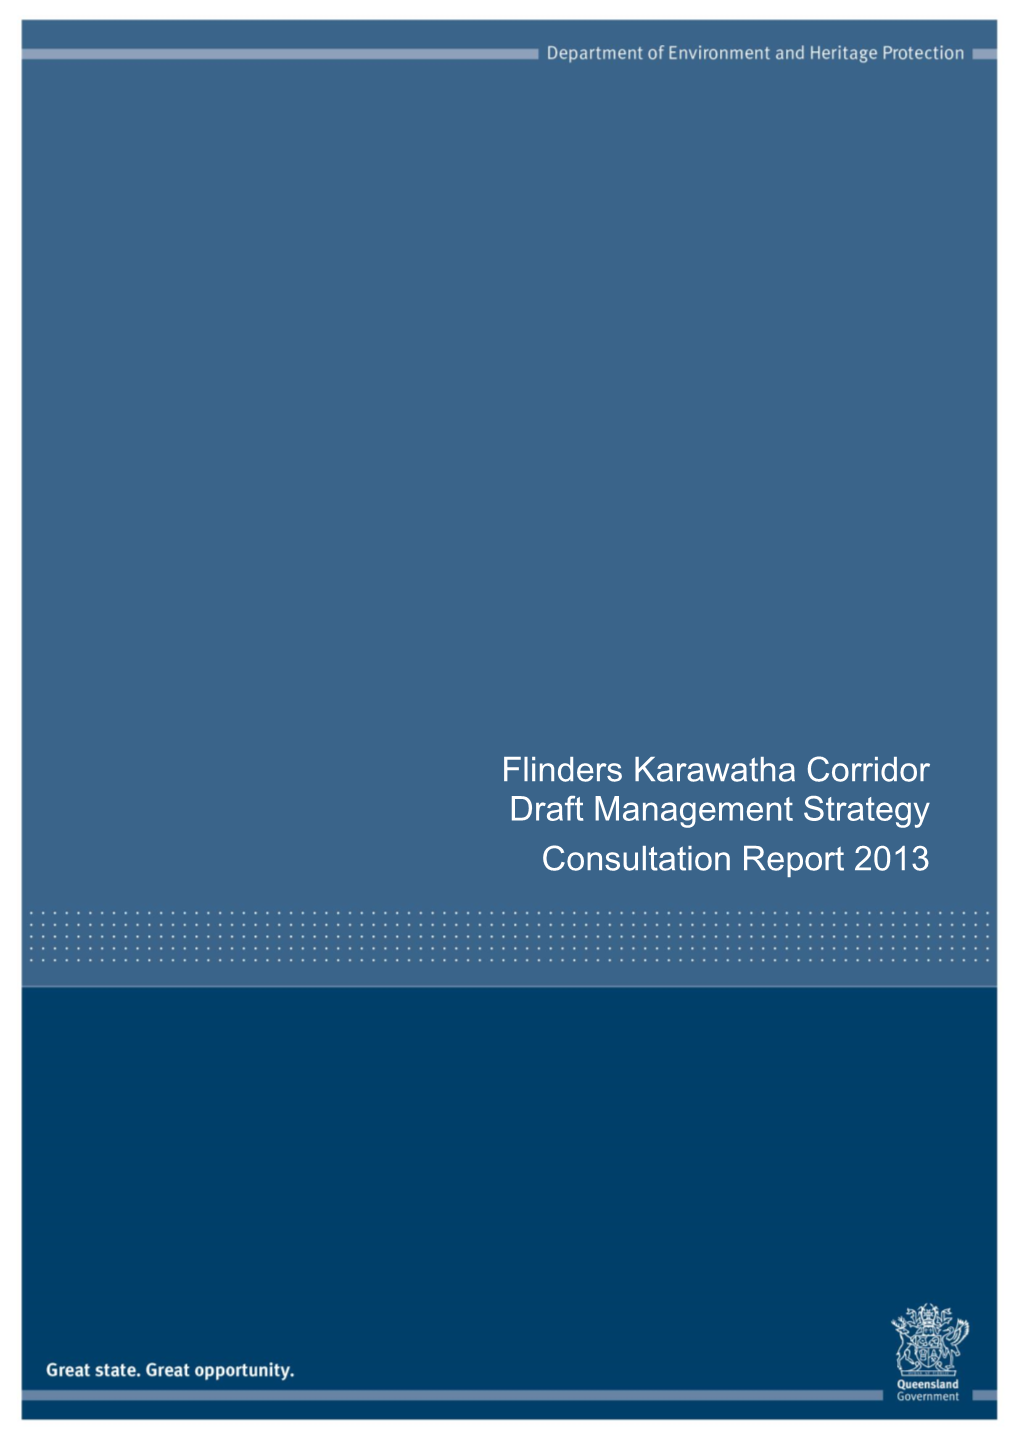 Flinders Karawatha Corridor Draft Management Strategy Consultation Report 2013